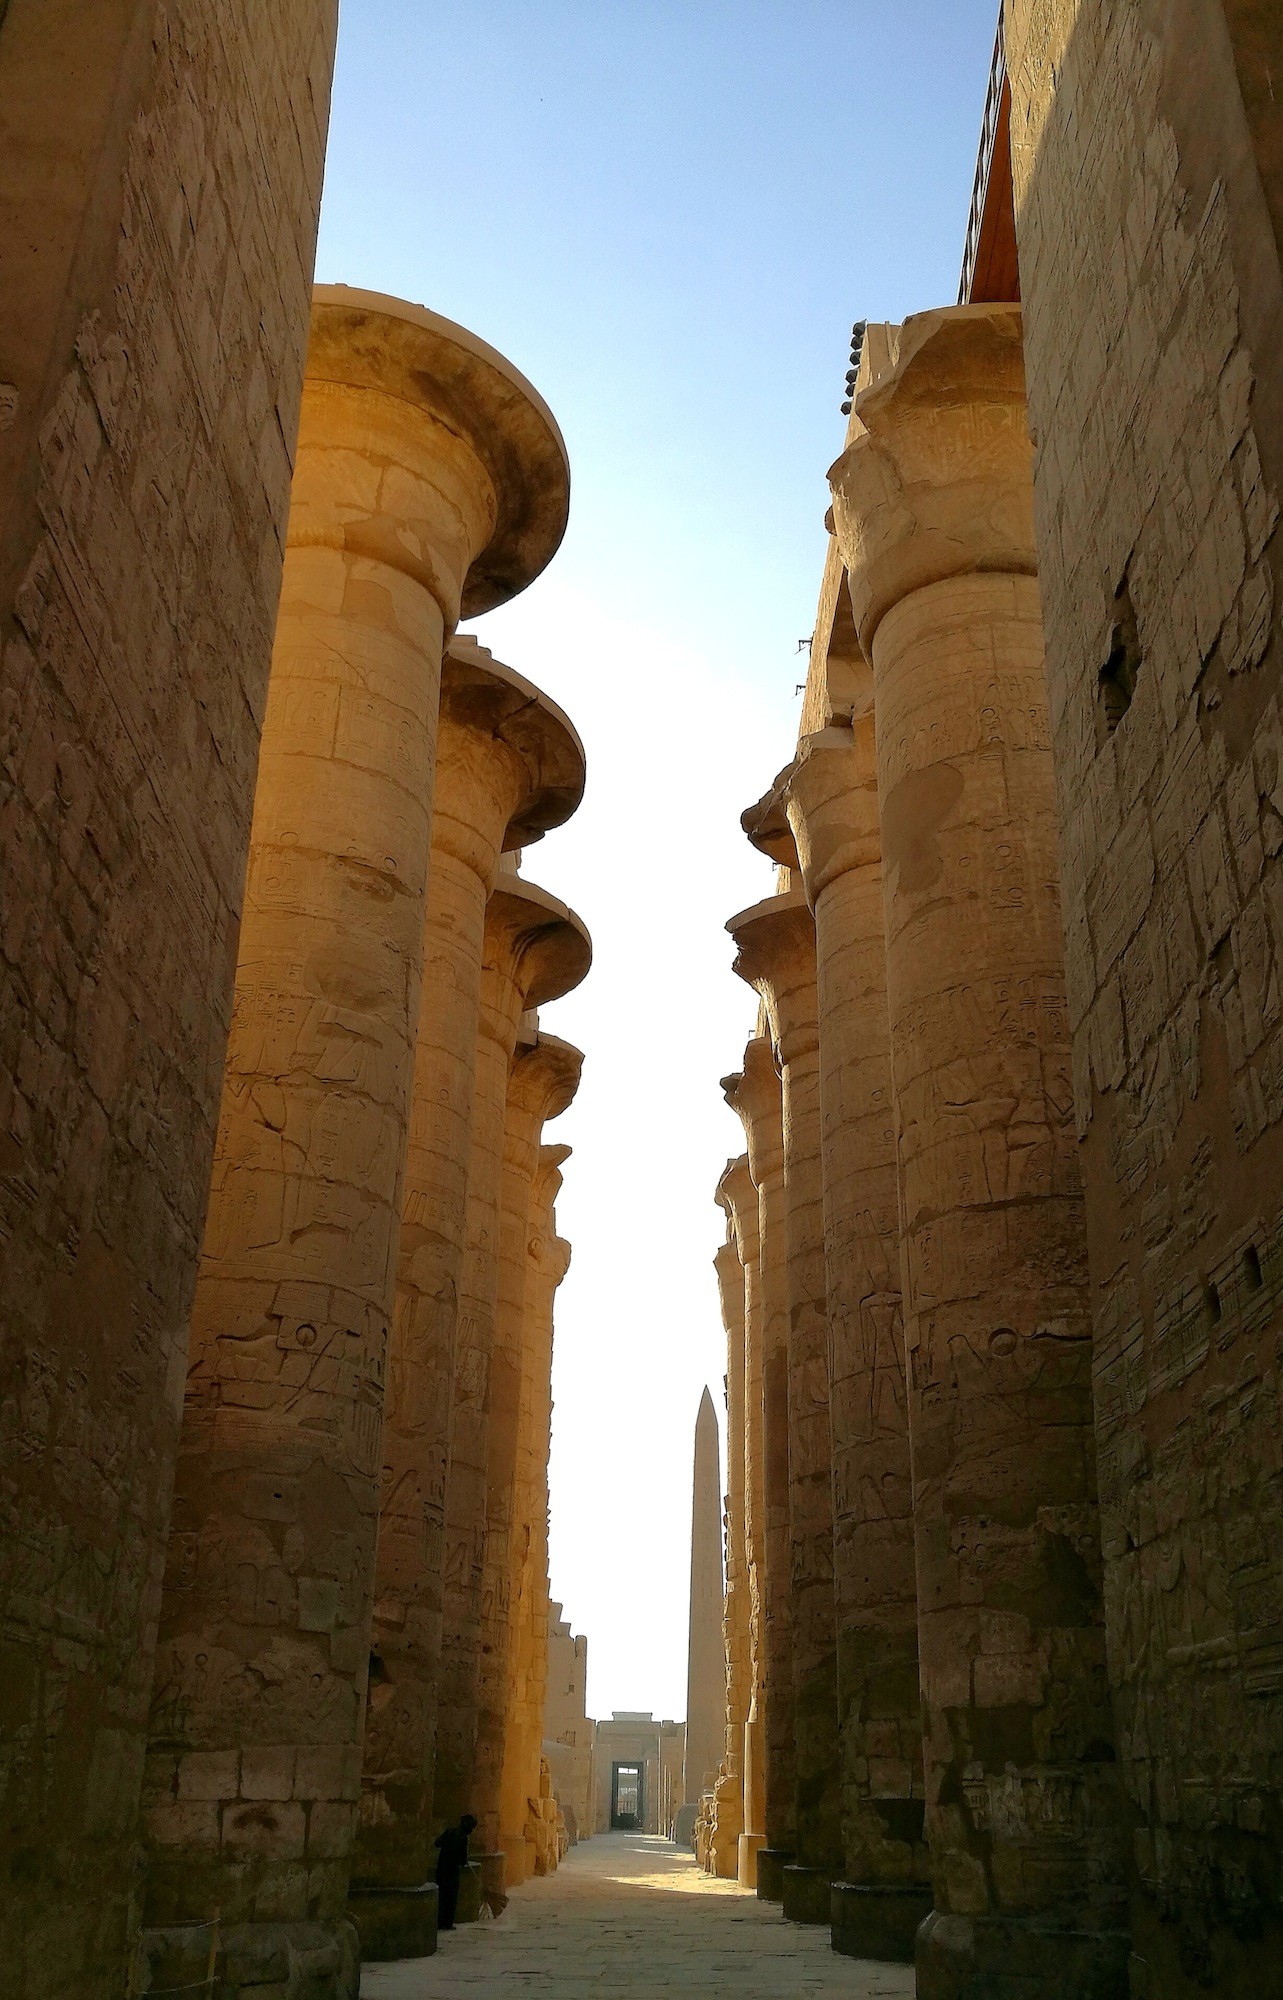 Karnak Temple的大石柱。屋顶塌了，石柱依然屹立不倒。